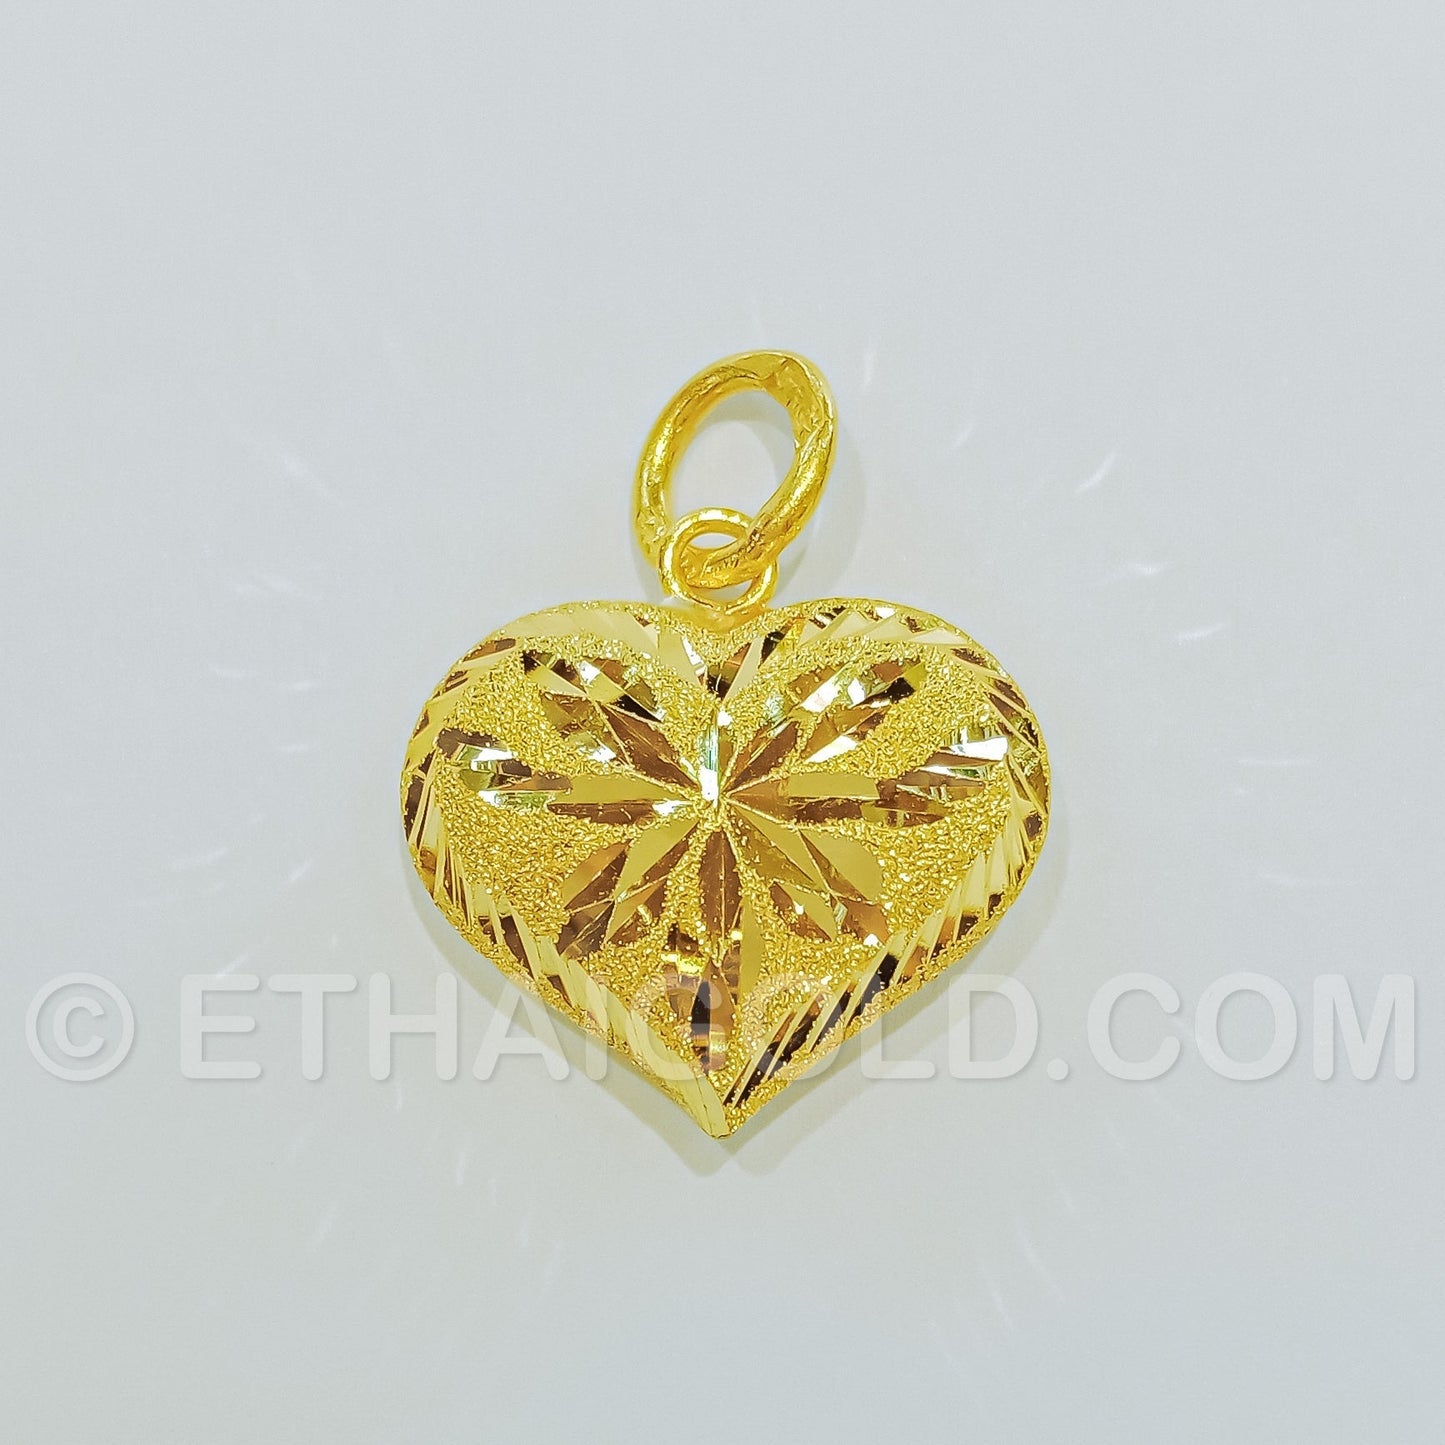 1/2 BAHT SPARKLING DIAMOND-CUT HOLLOW HEART PENDANT IN 23K GOLD (ID: P0102S)